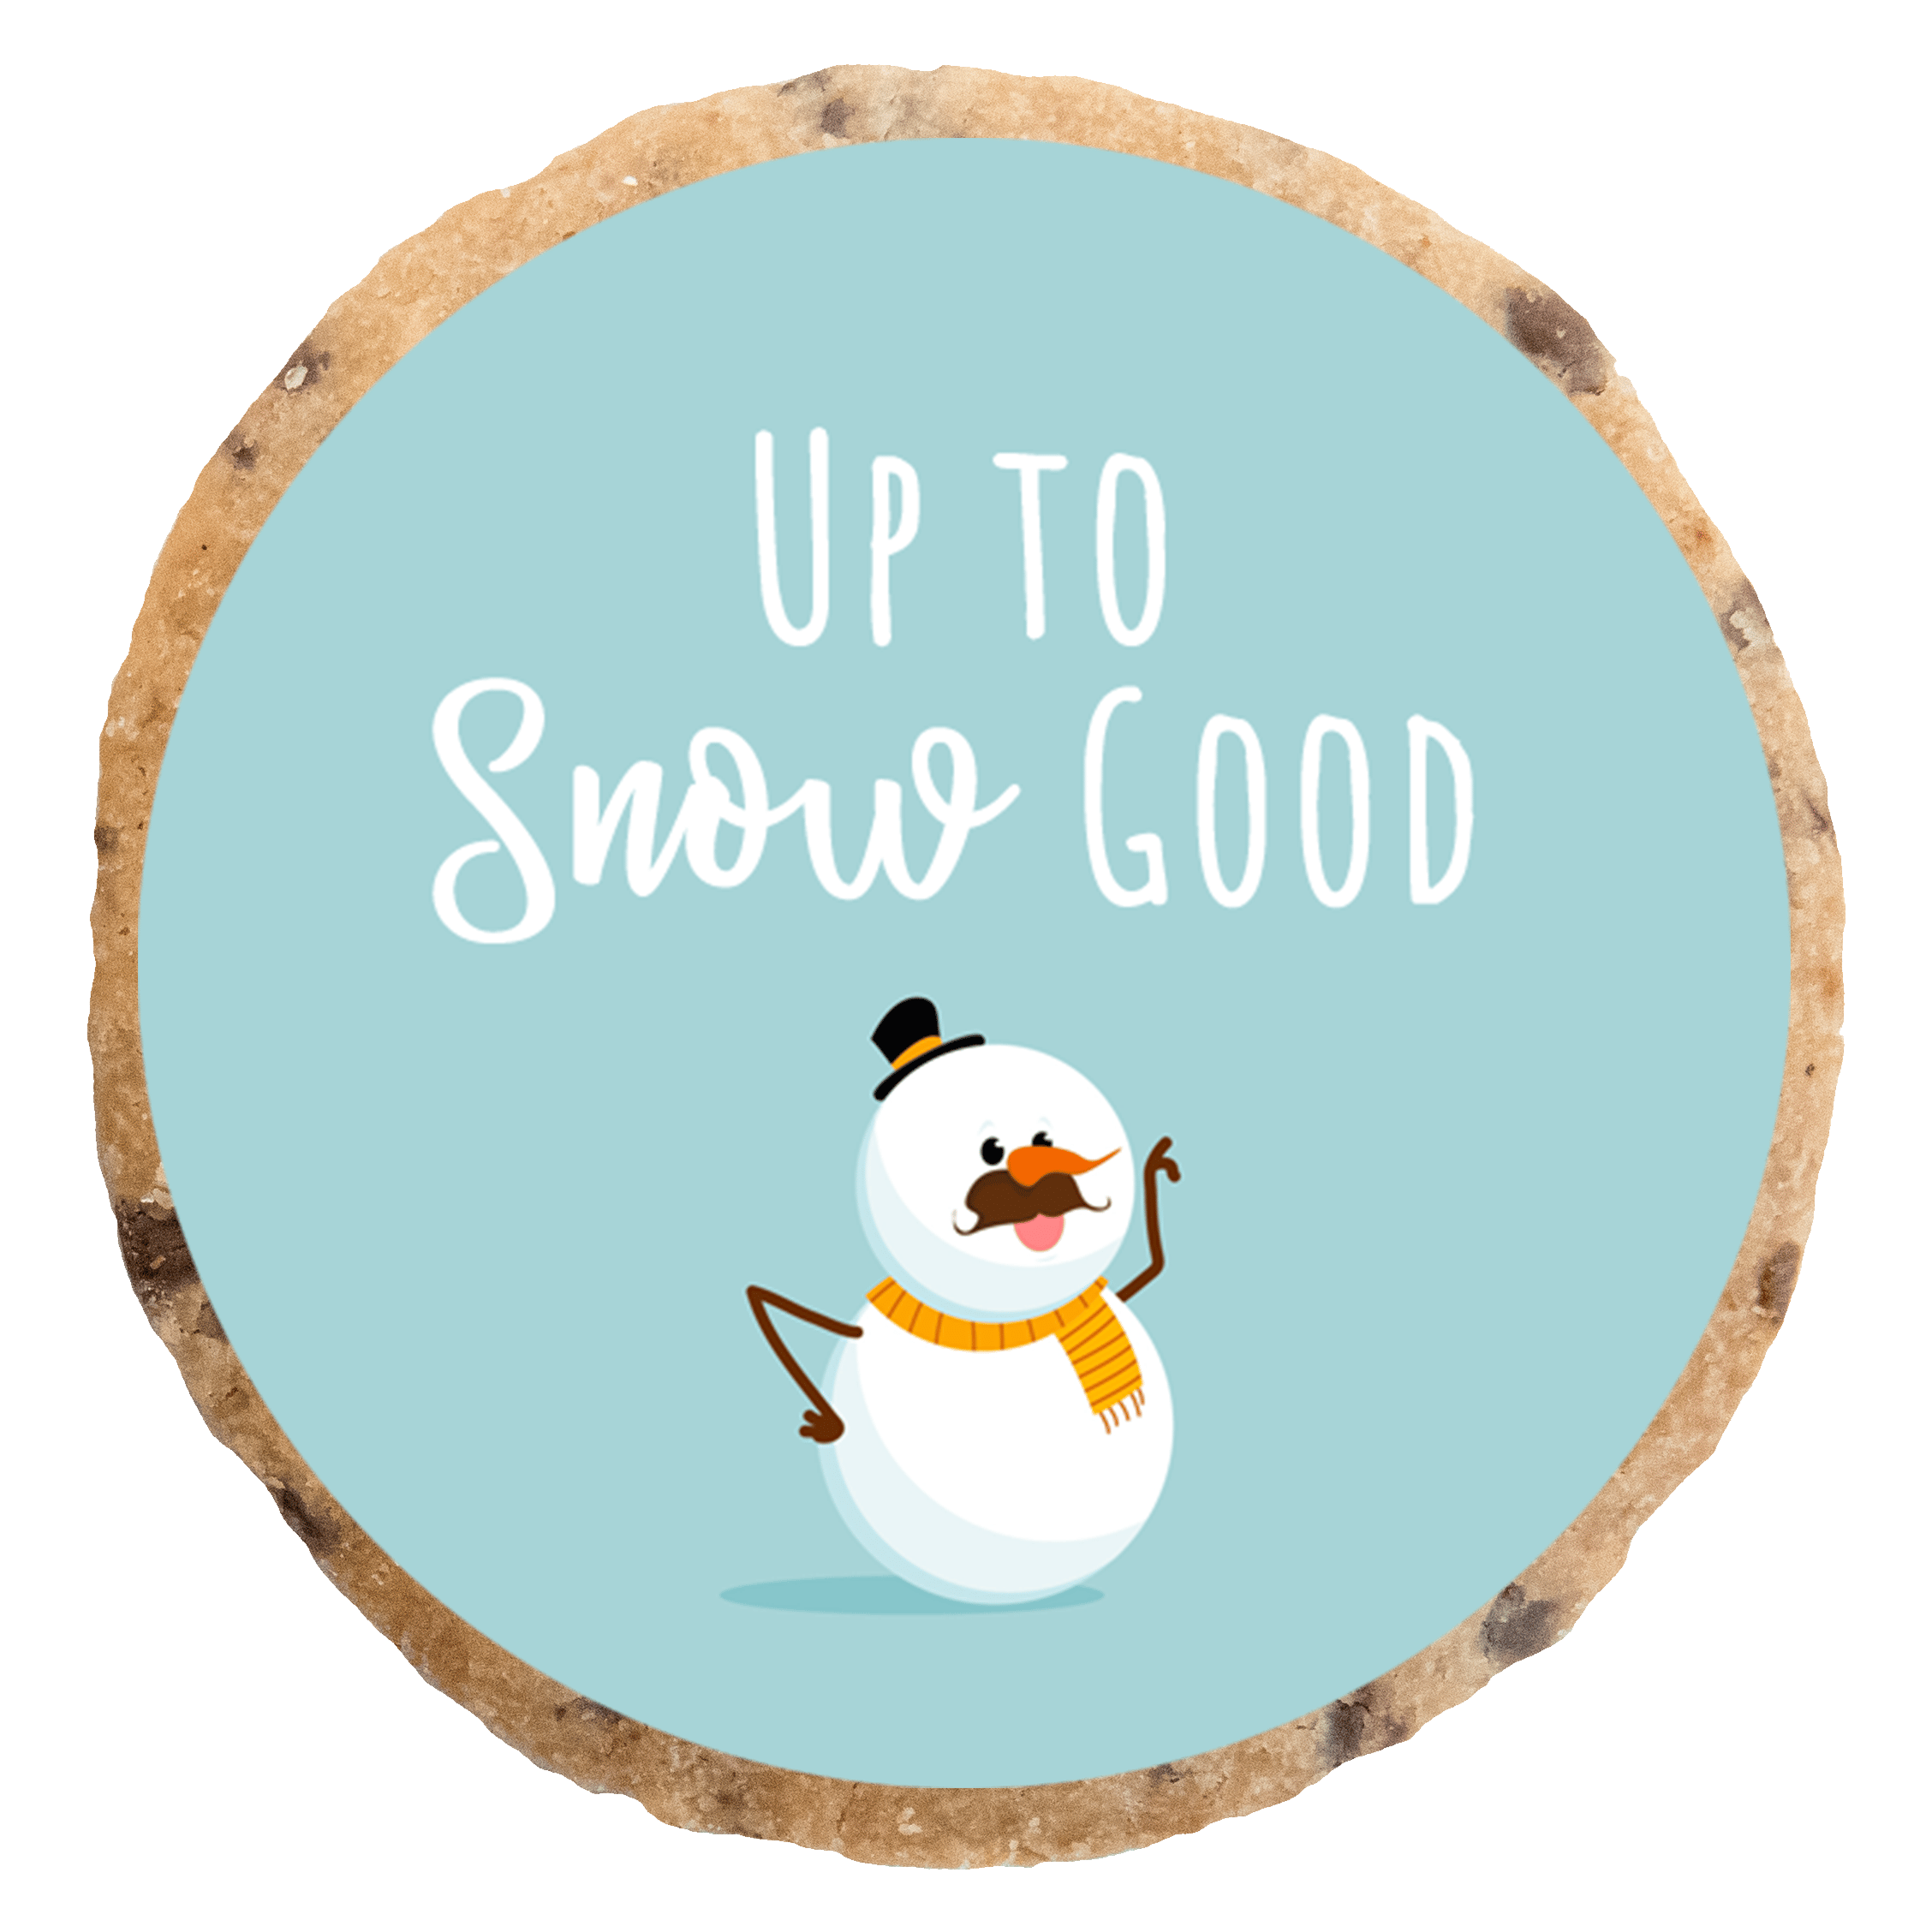 "Up to snow good" MotivKEKS